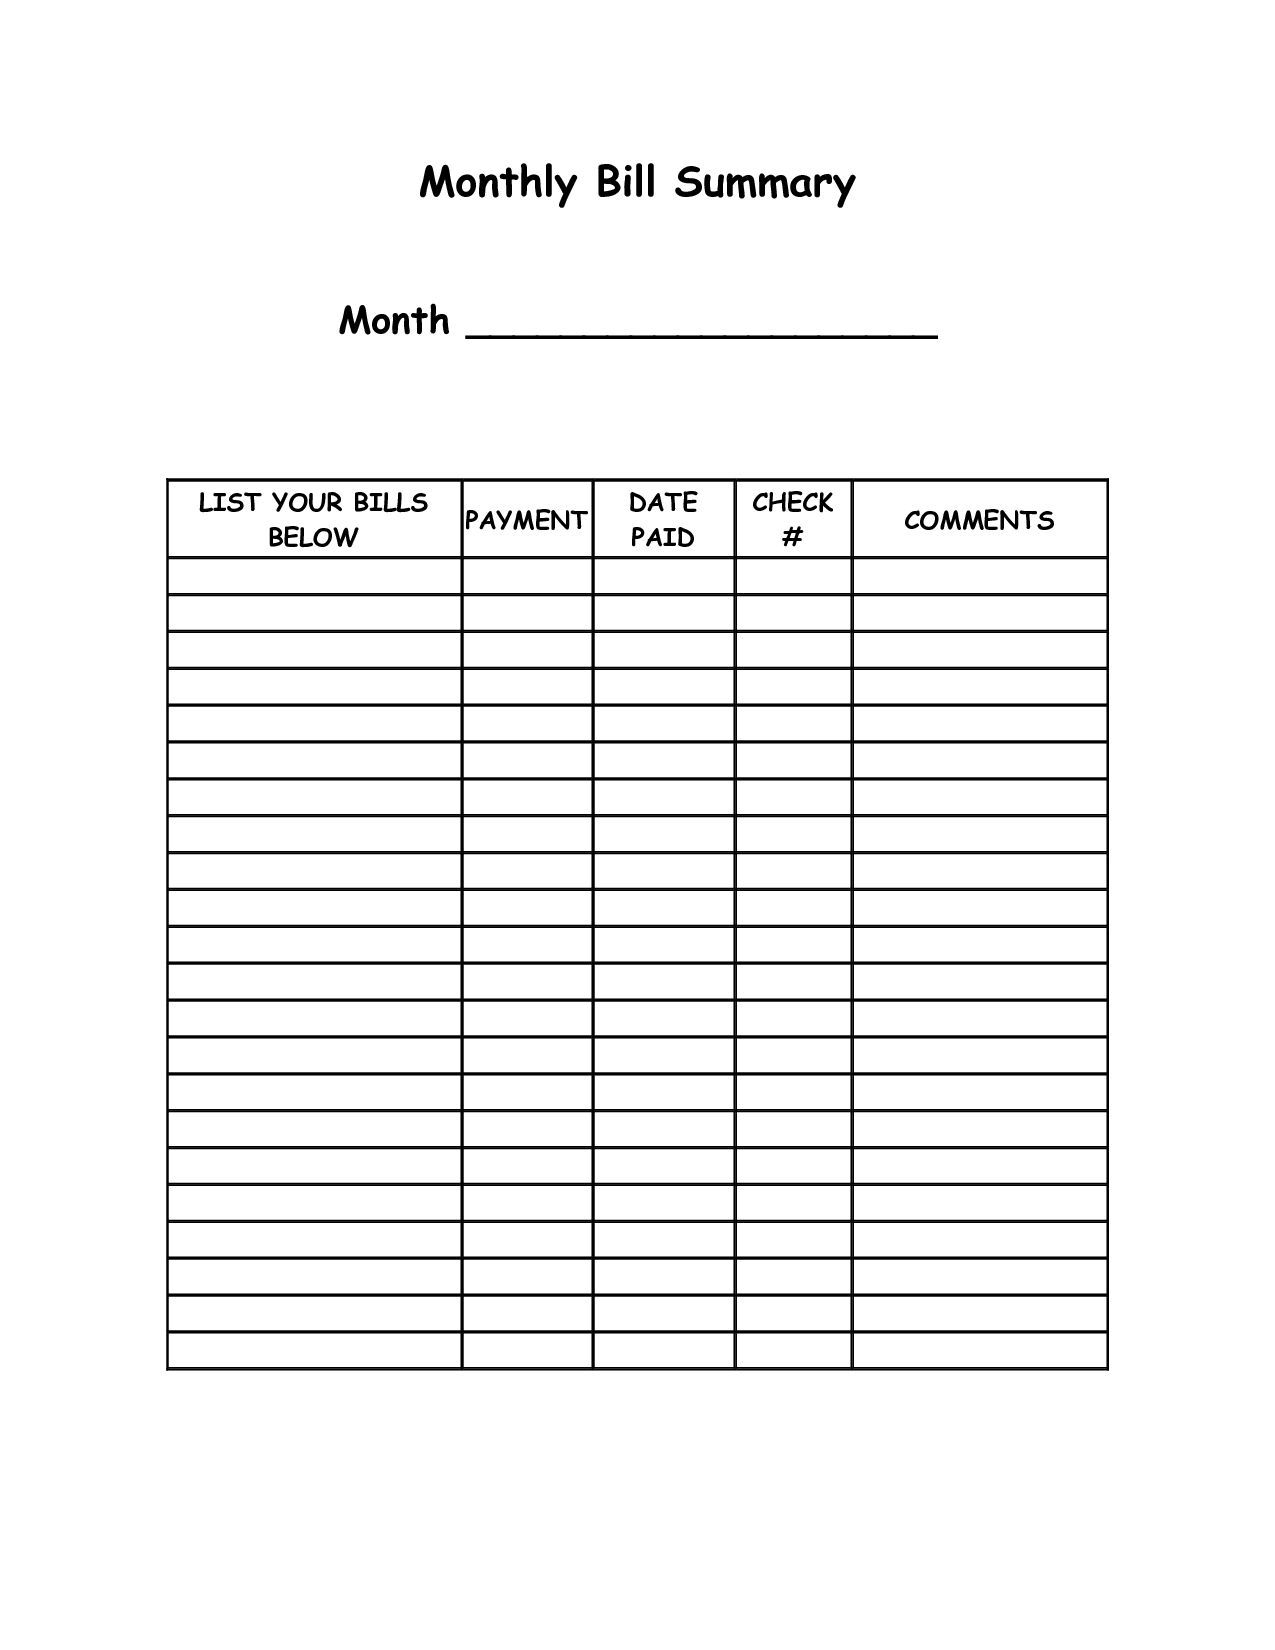 Monthly Bill Summary Doc | Organization | Organizing Monthly Bills - Free Printable Monthly Bill Payment Worksheet